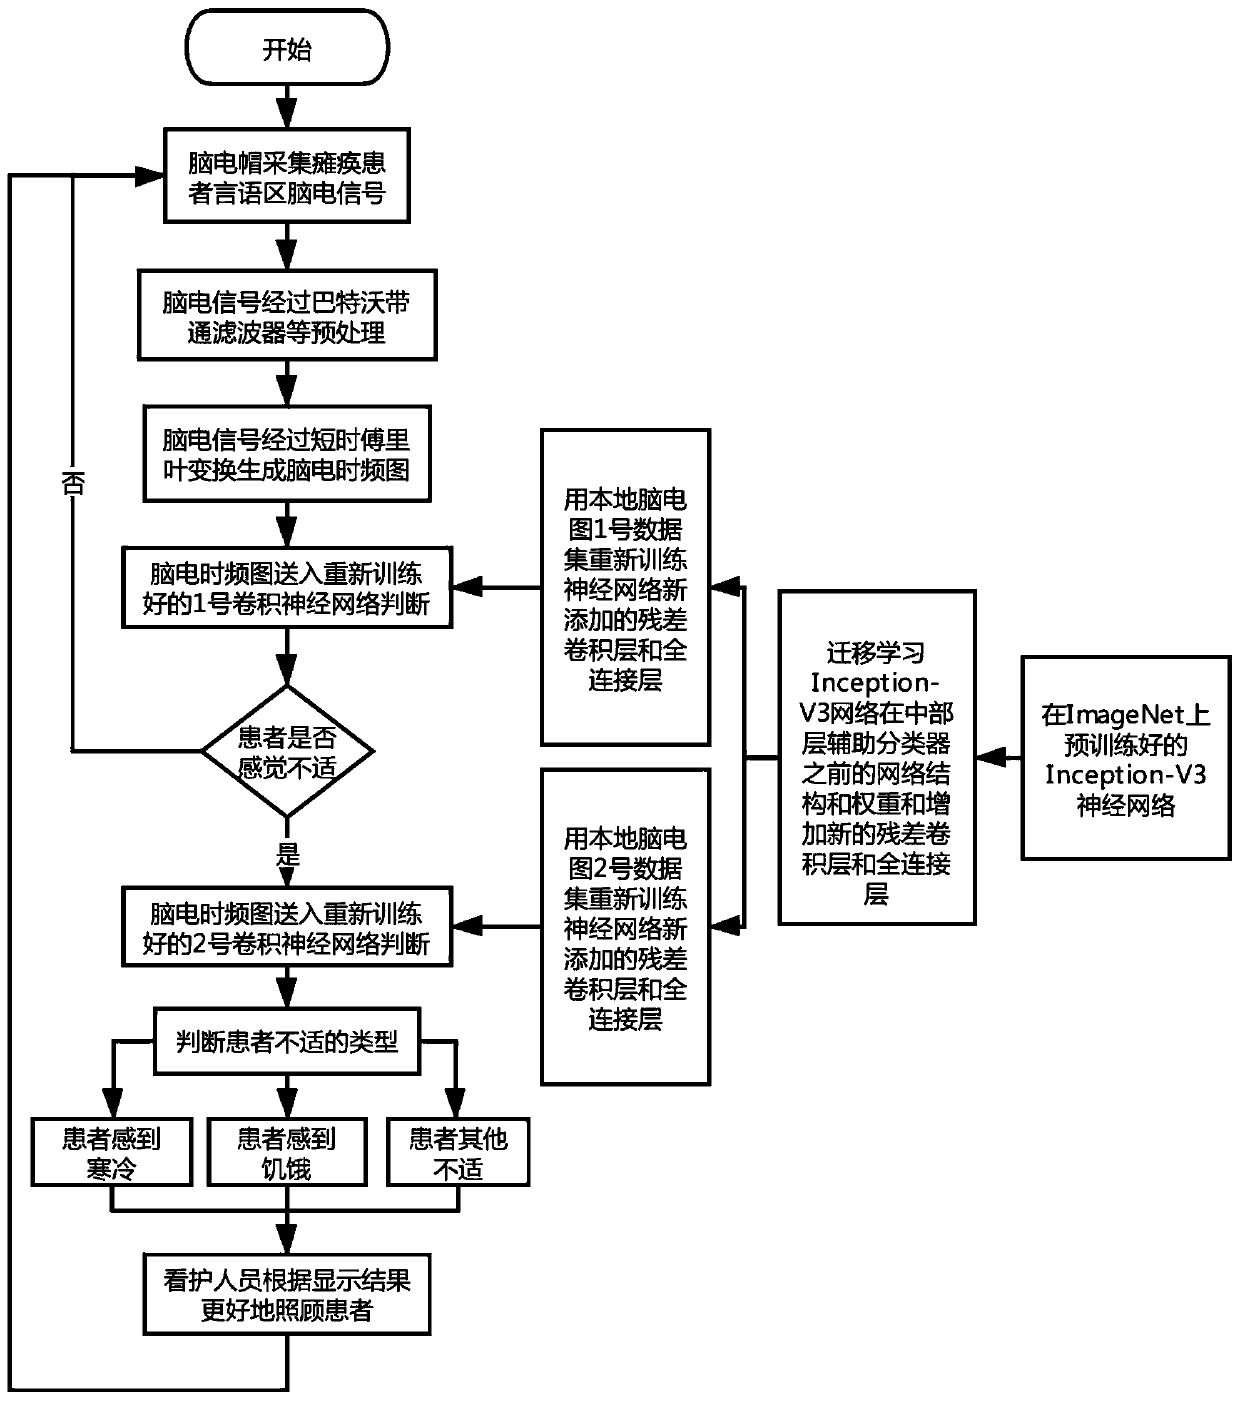 Chinese speech decoding nursing system based on transfer learning